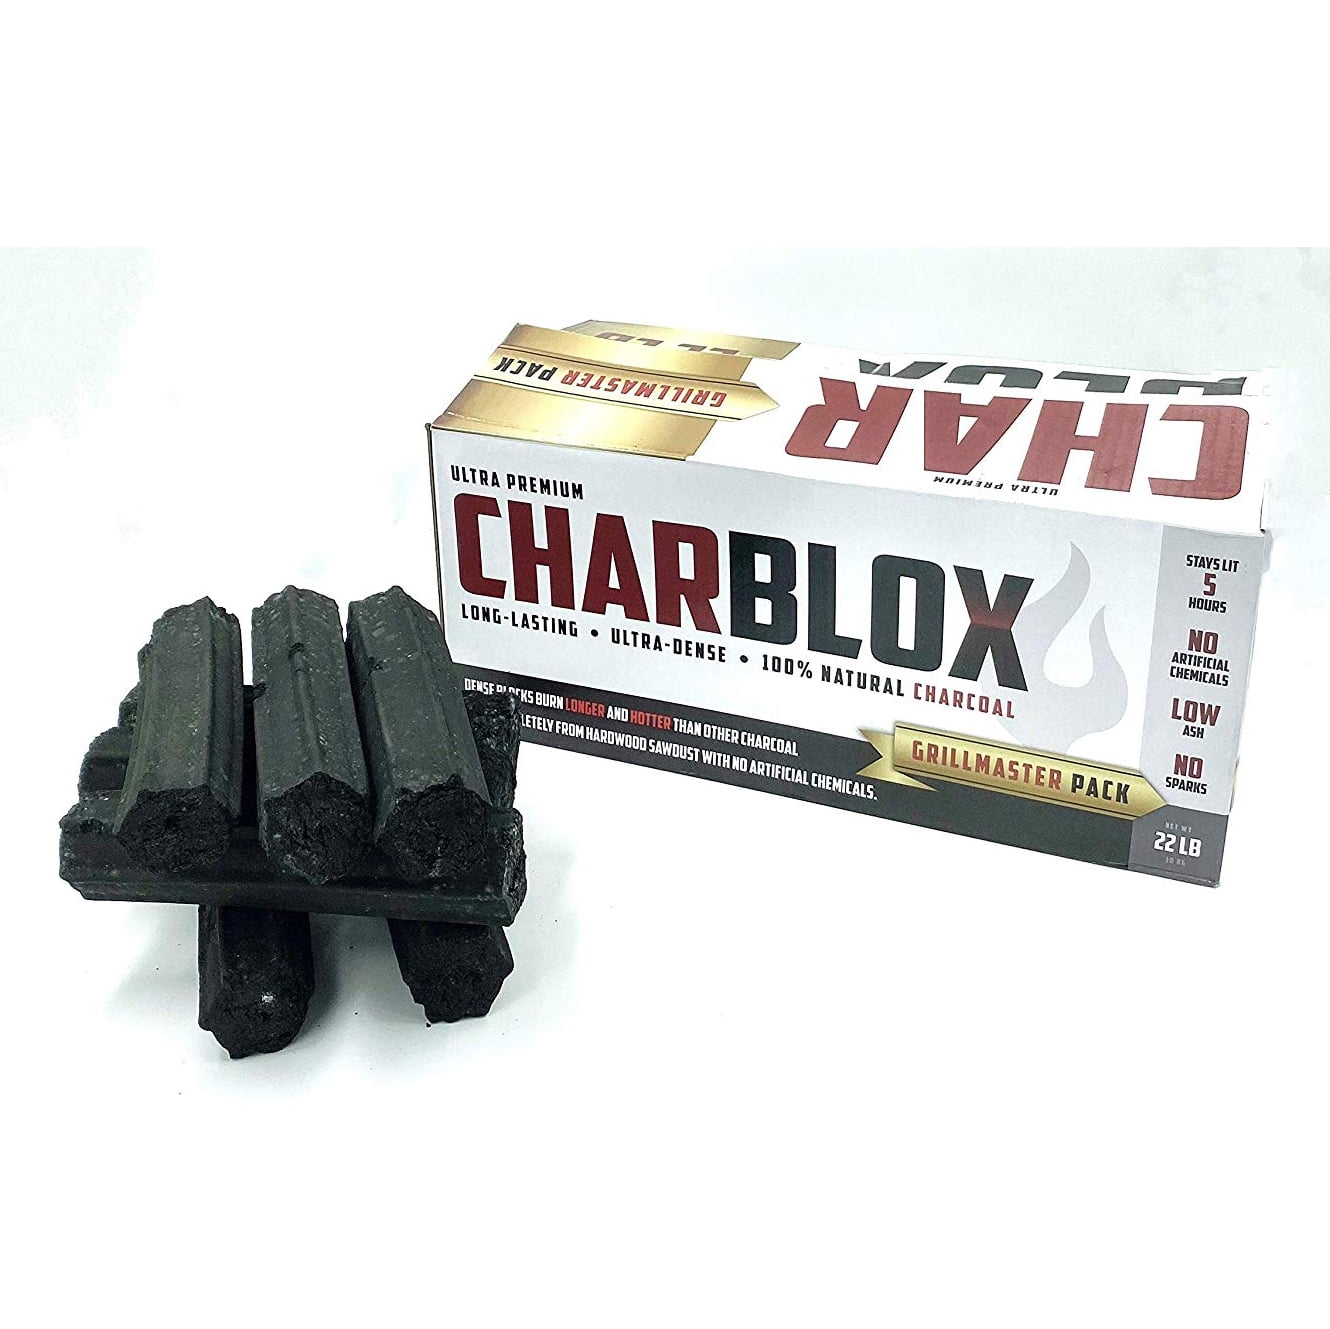 22 Lbs CHARBLOX TEC-00002 Lasting Premium Natural Wood Grilling Charcoal Logs 